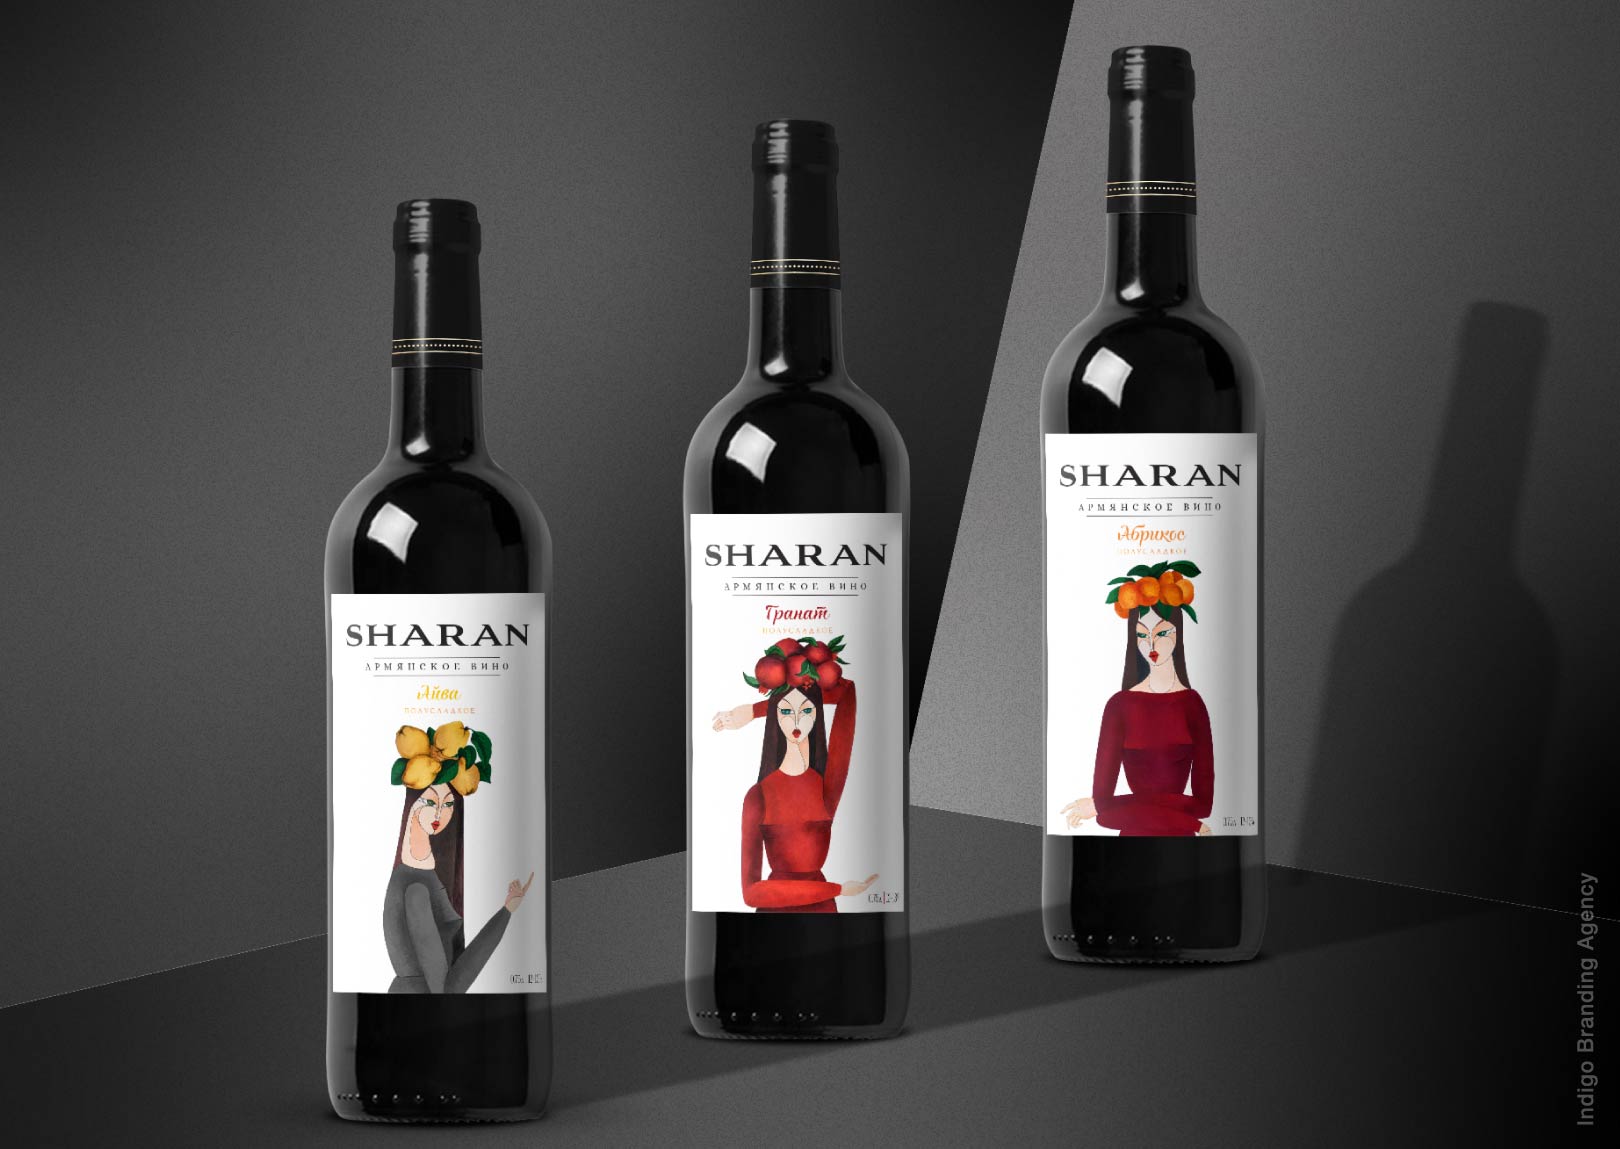 Sharan Fruit Wines branding and labeling by Indigo branding